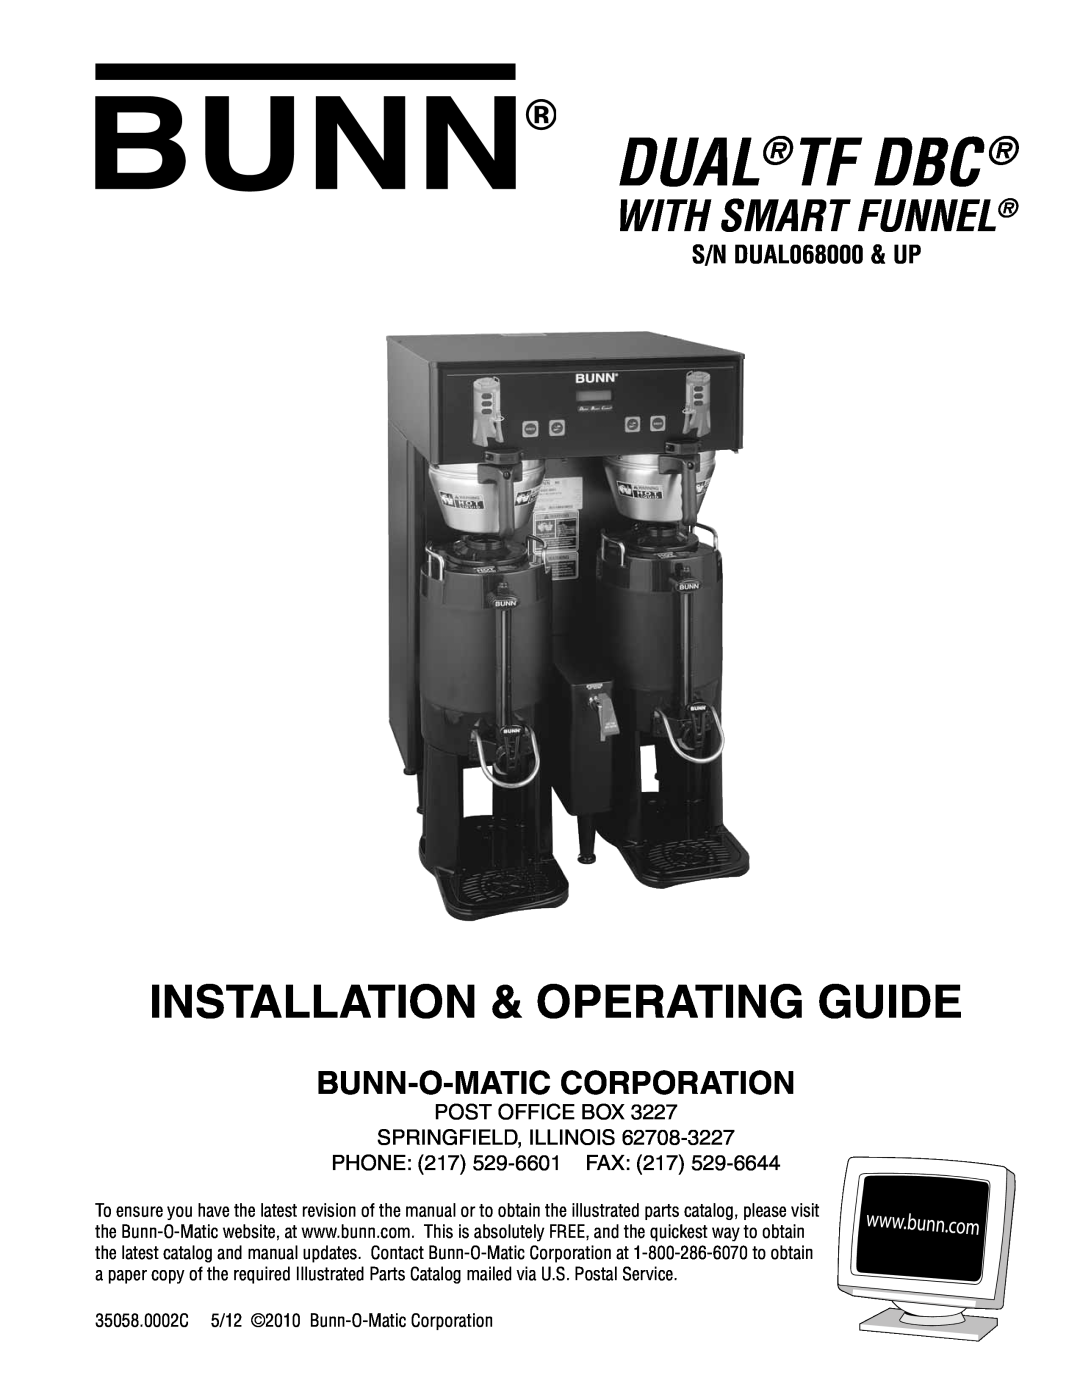 Bunn manual S/N DUAL068000 & UP, S/N SNG0033000 & UP, Dualtf Dbc, Single Tf Dbc, Programming Manual, W/Smart Funnel 